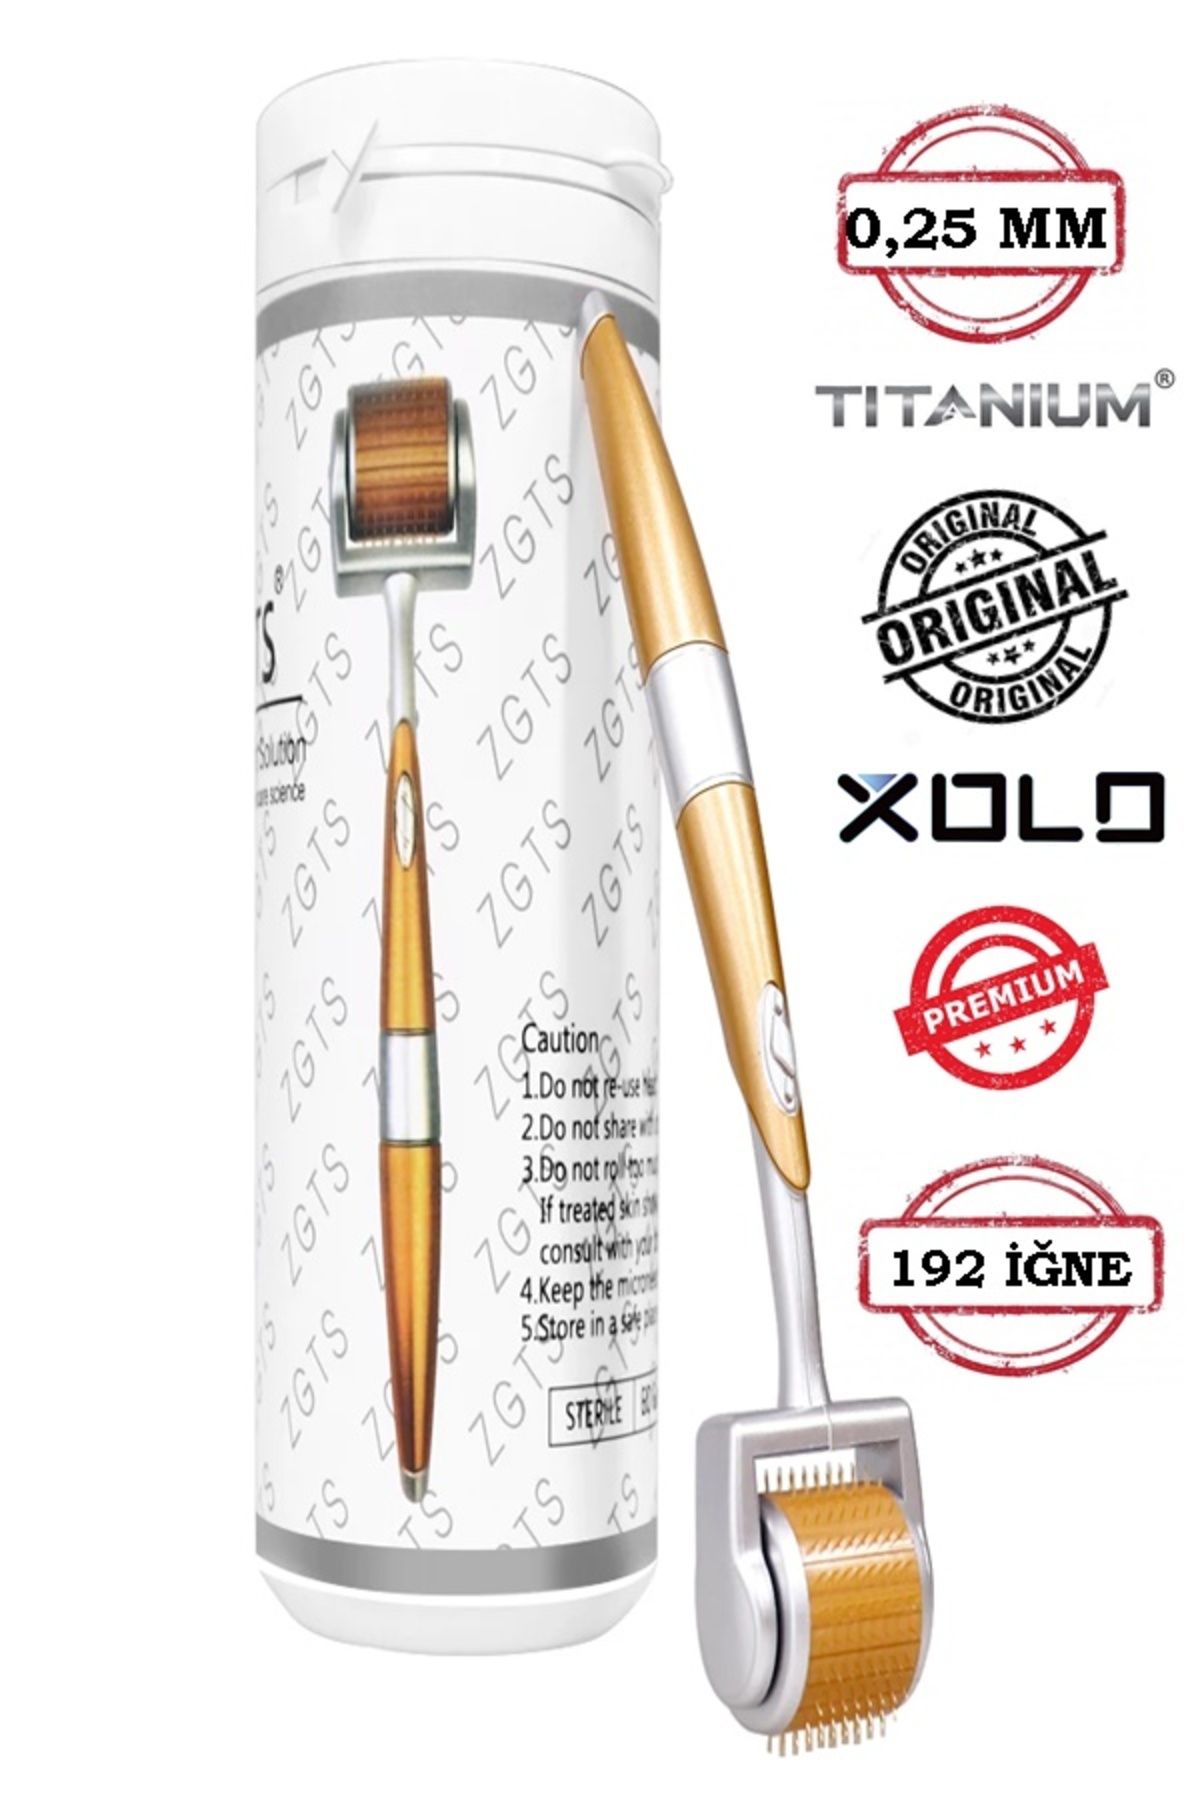 Xolo ZGTS 0,25MM Dermaroller Profesyonel Titanyum Derma Roller 0,25 mm Göz Çevresi 192 iğne